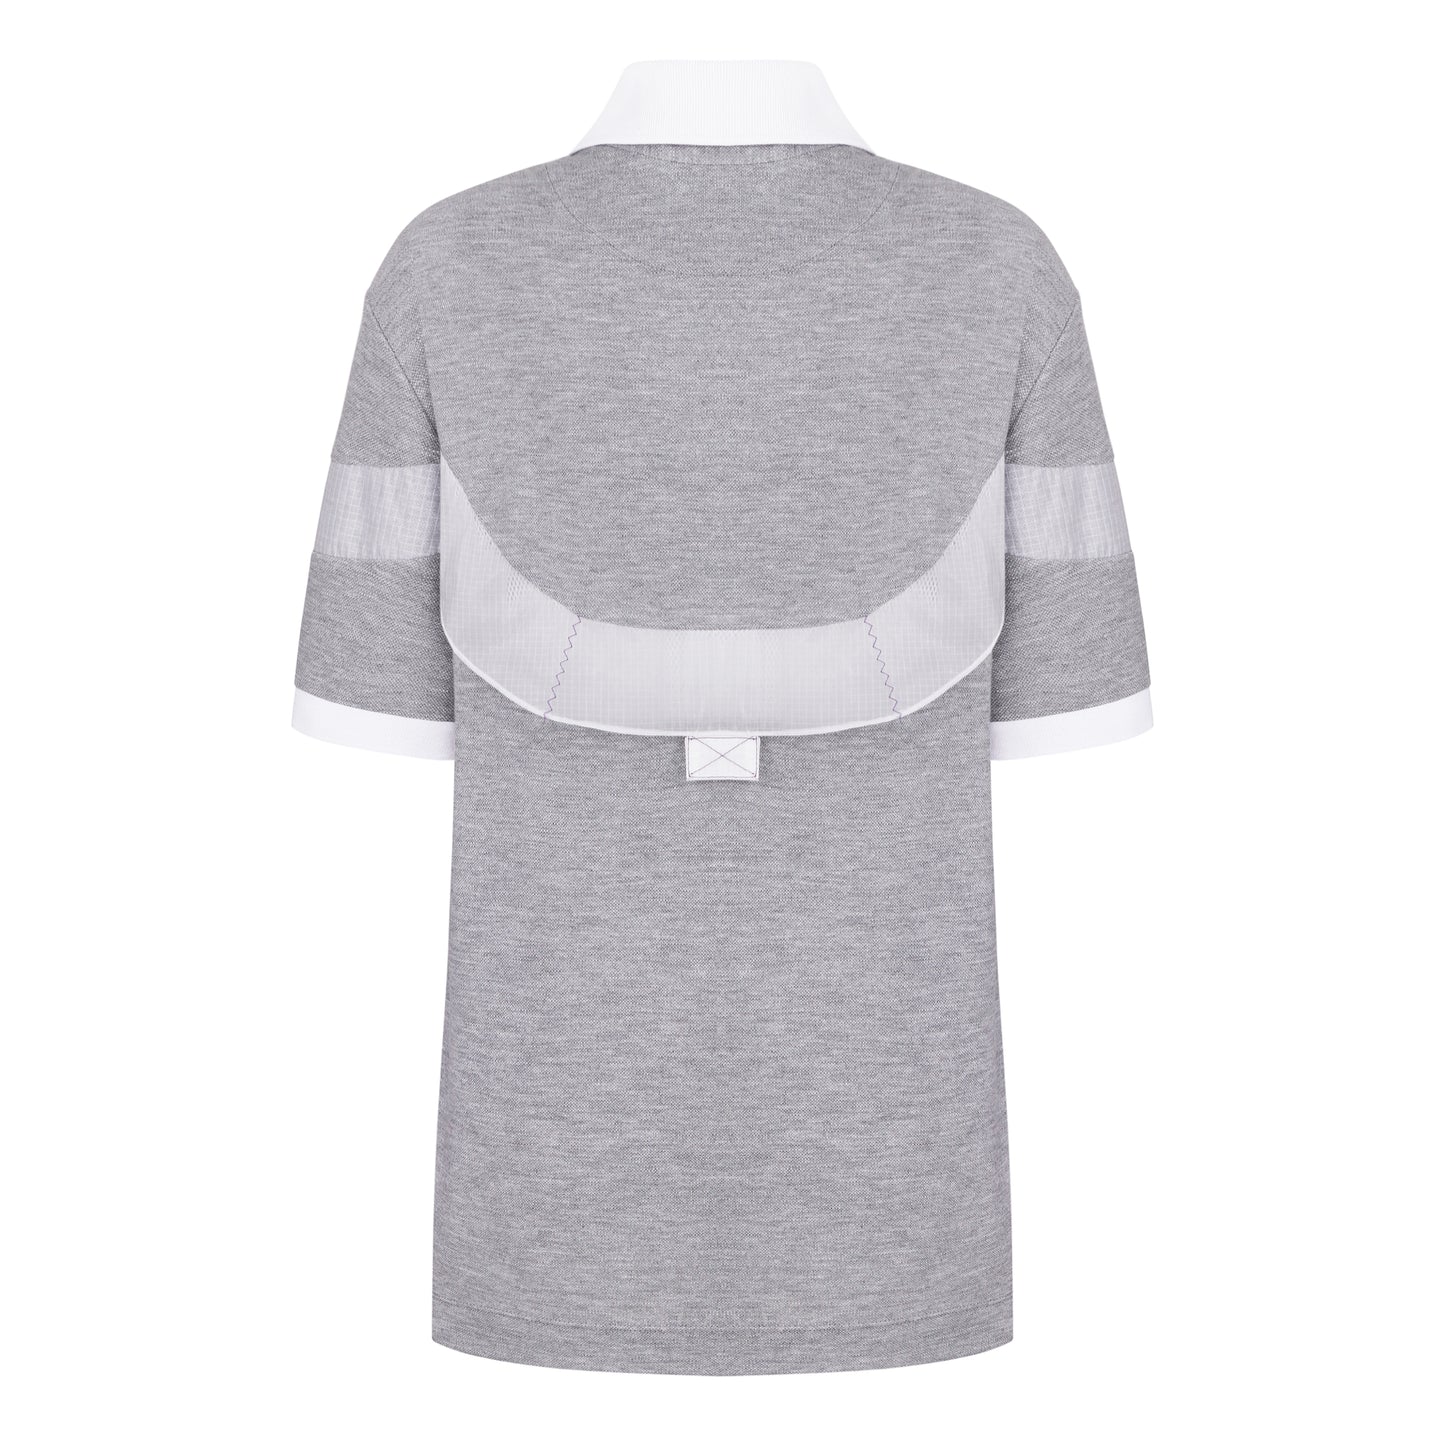 Designer grey polo shirt from REwind